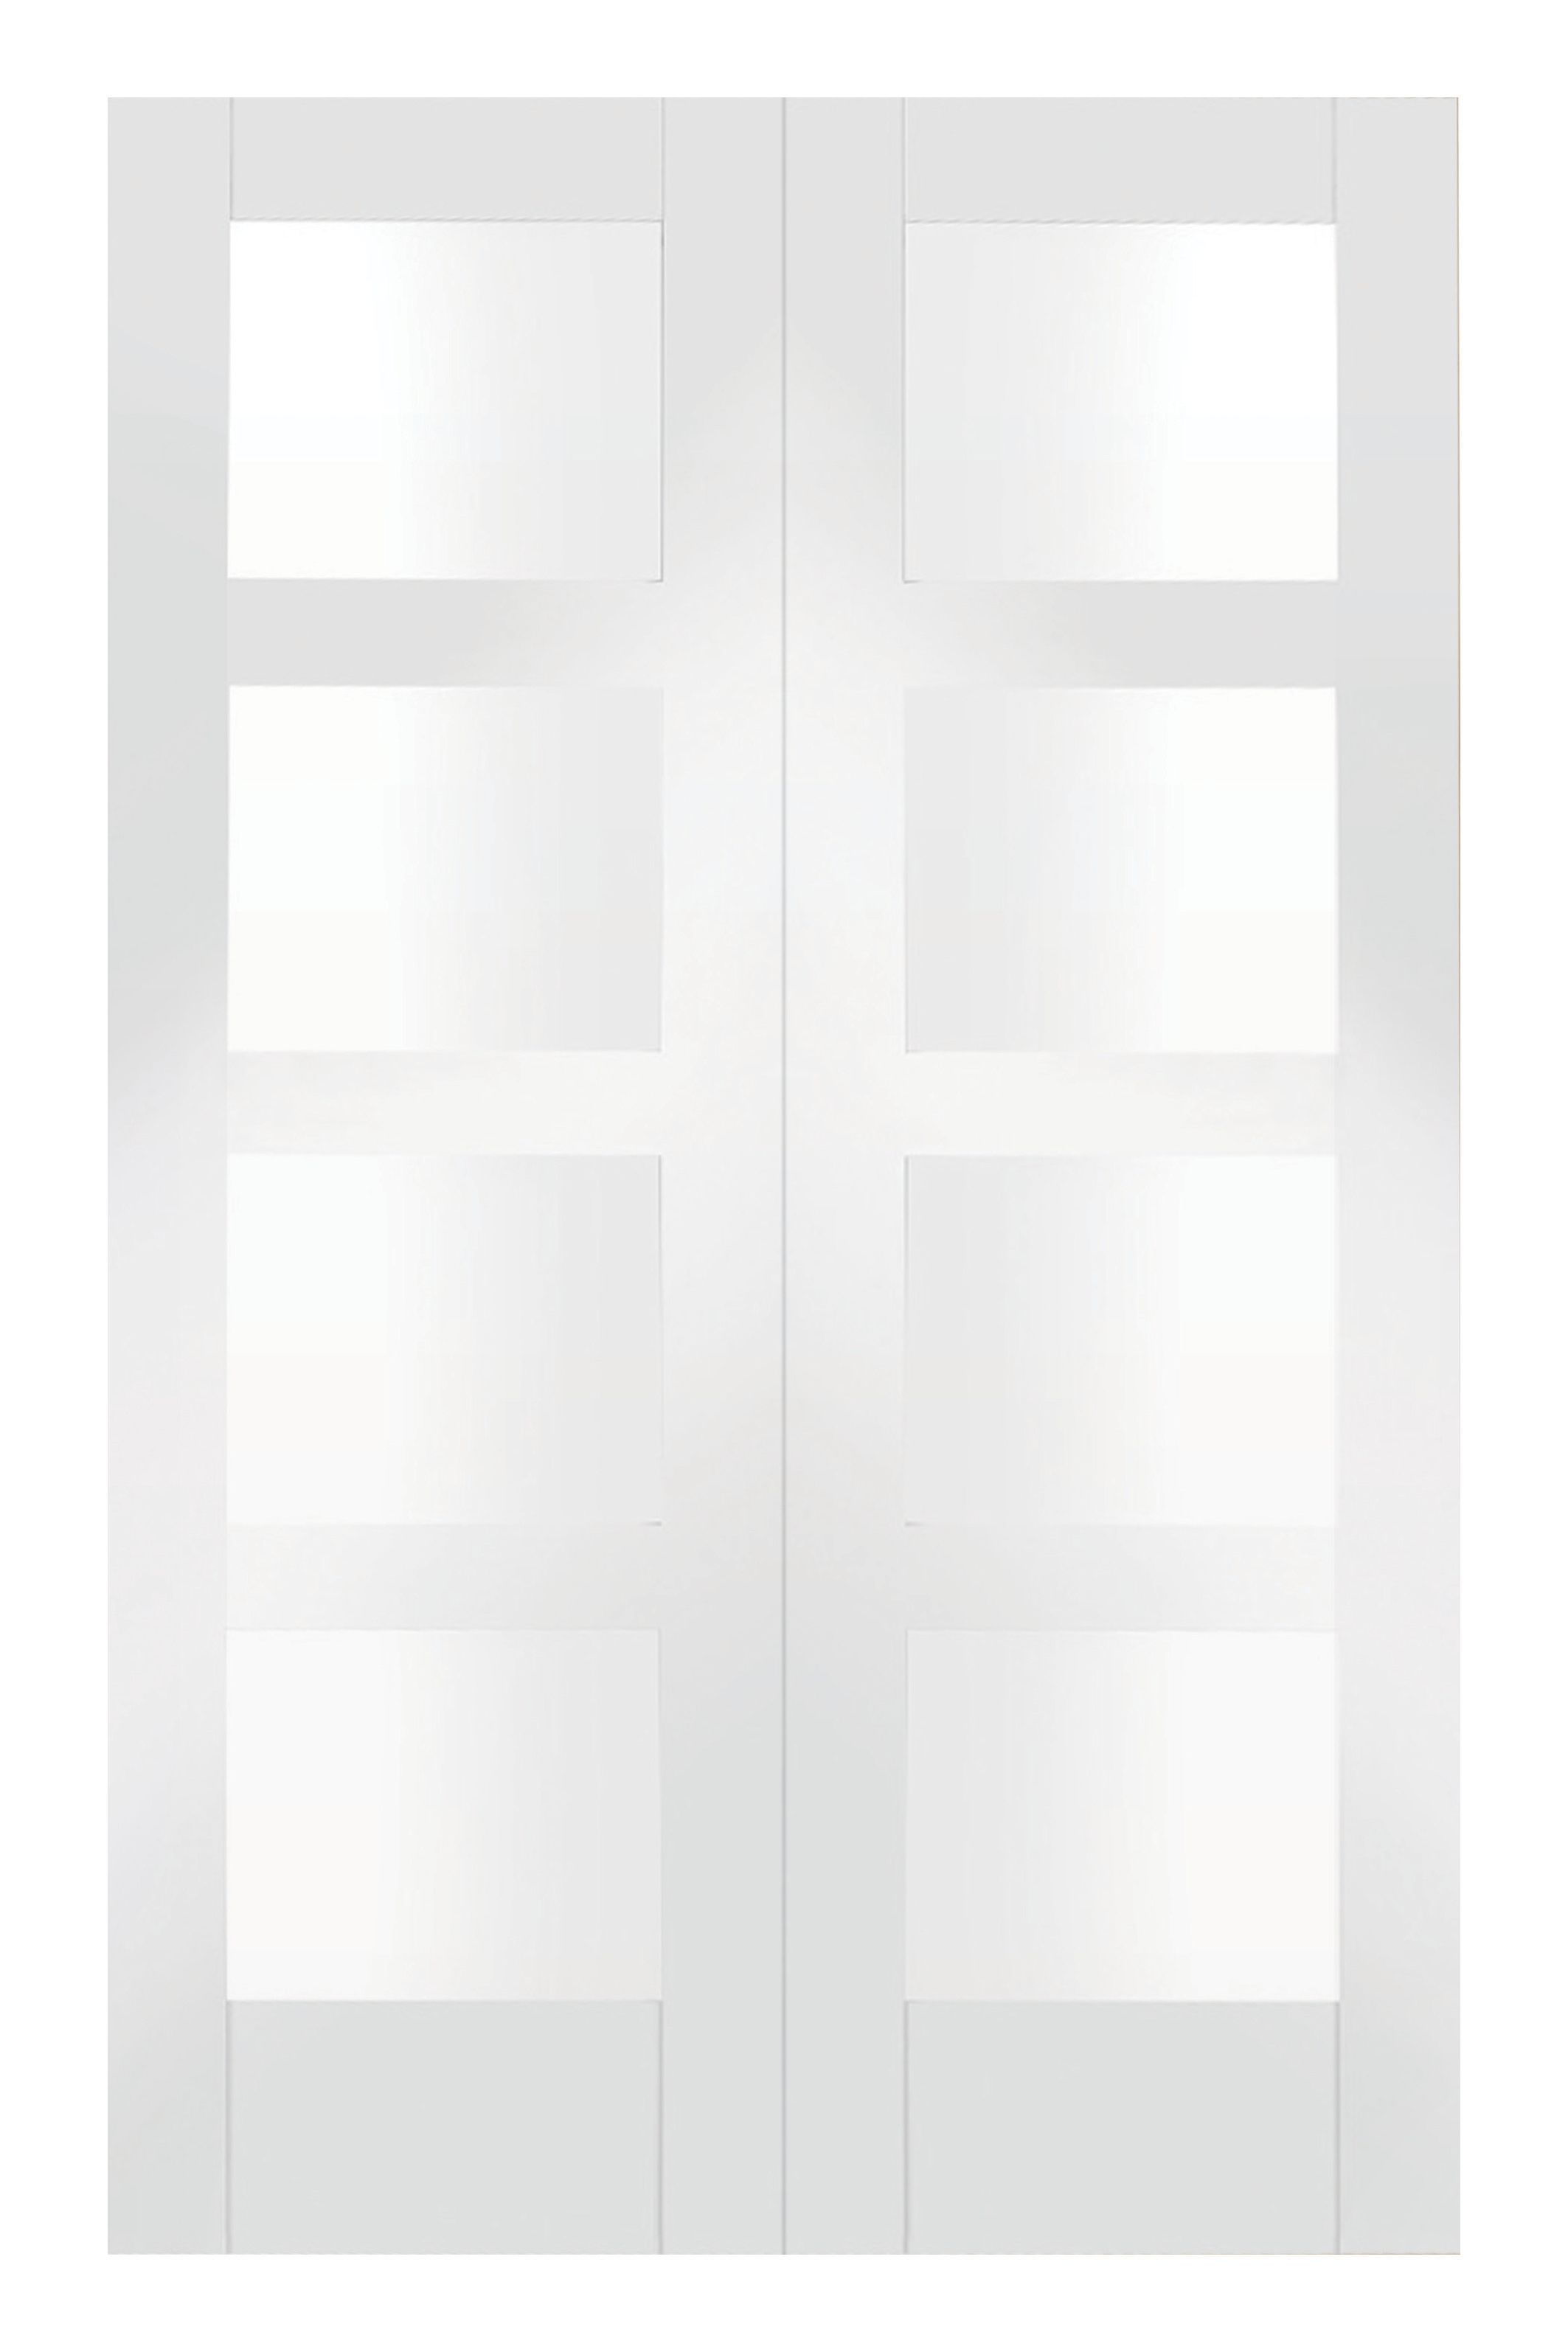 Image of Wickes Barton White Fully Glazed MDF 4 Panel Rebated Internal Door Pair - 1981 x 1372mm